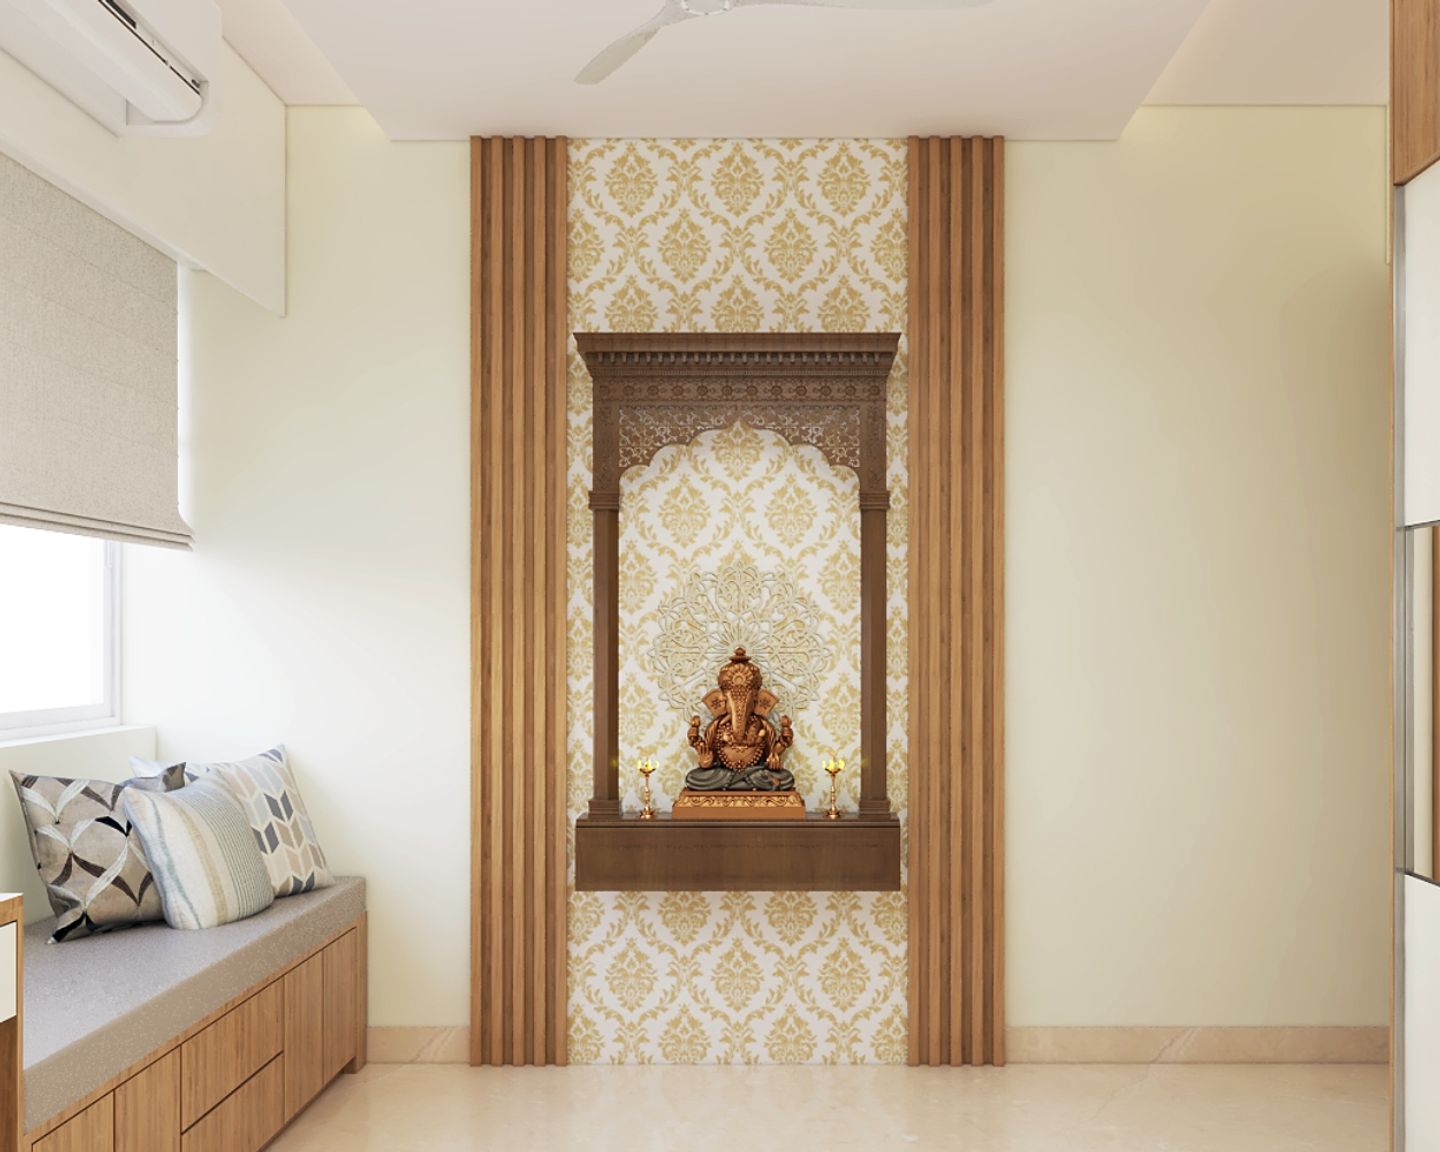 Walnut Toned Pooja Room Design With Damask Wallpaper - Livspace